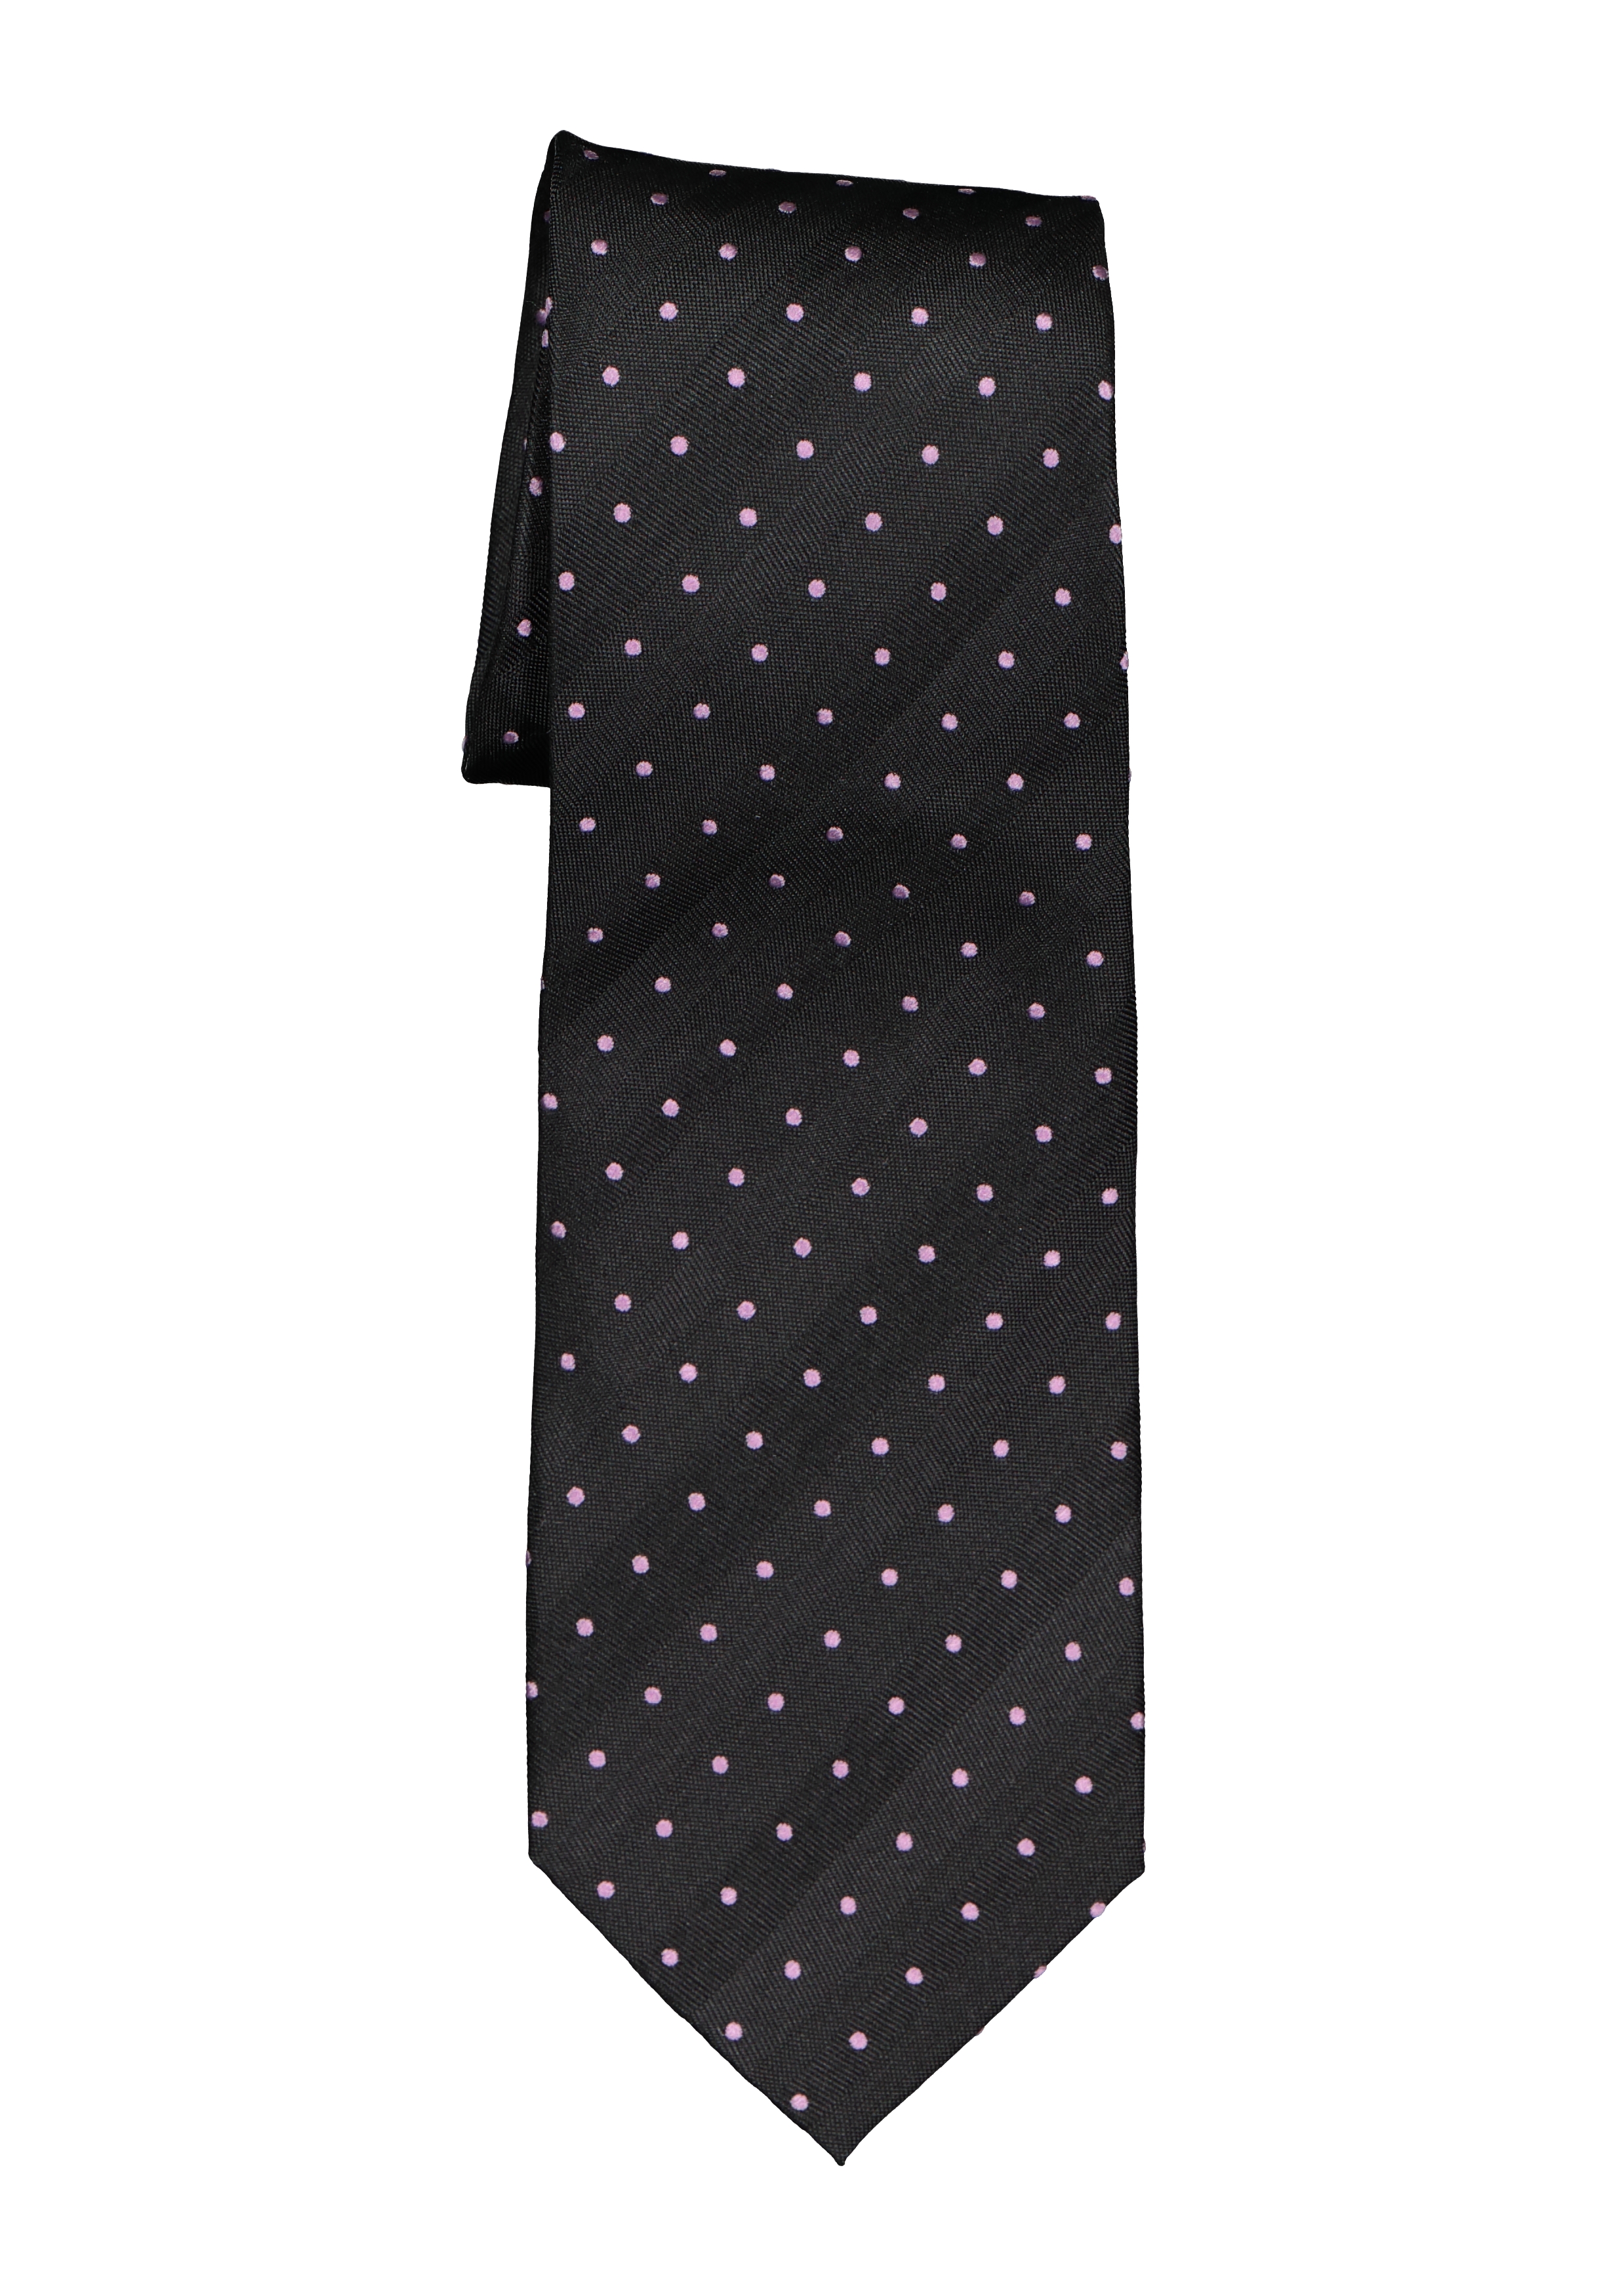 Birma textuur Desillusie Eterna stropdas, zwart met roze stip - bestel uw stropdas online. Gratis...